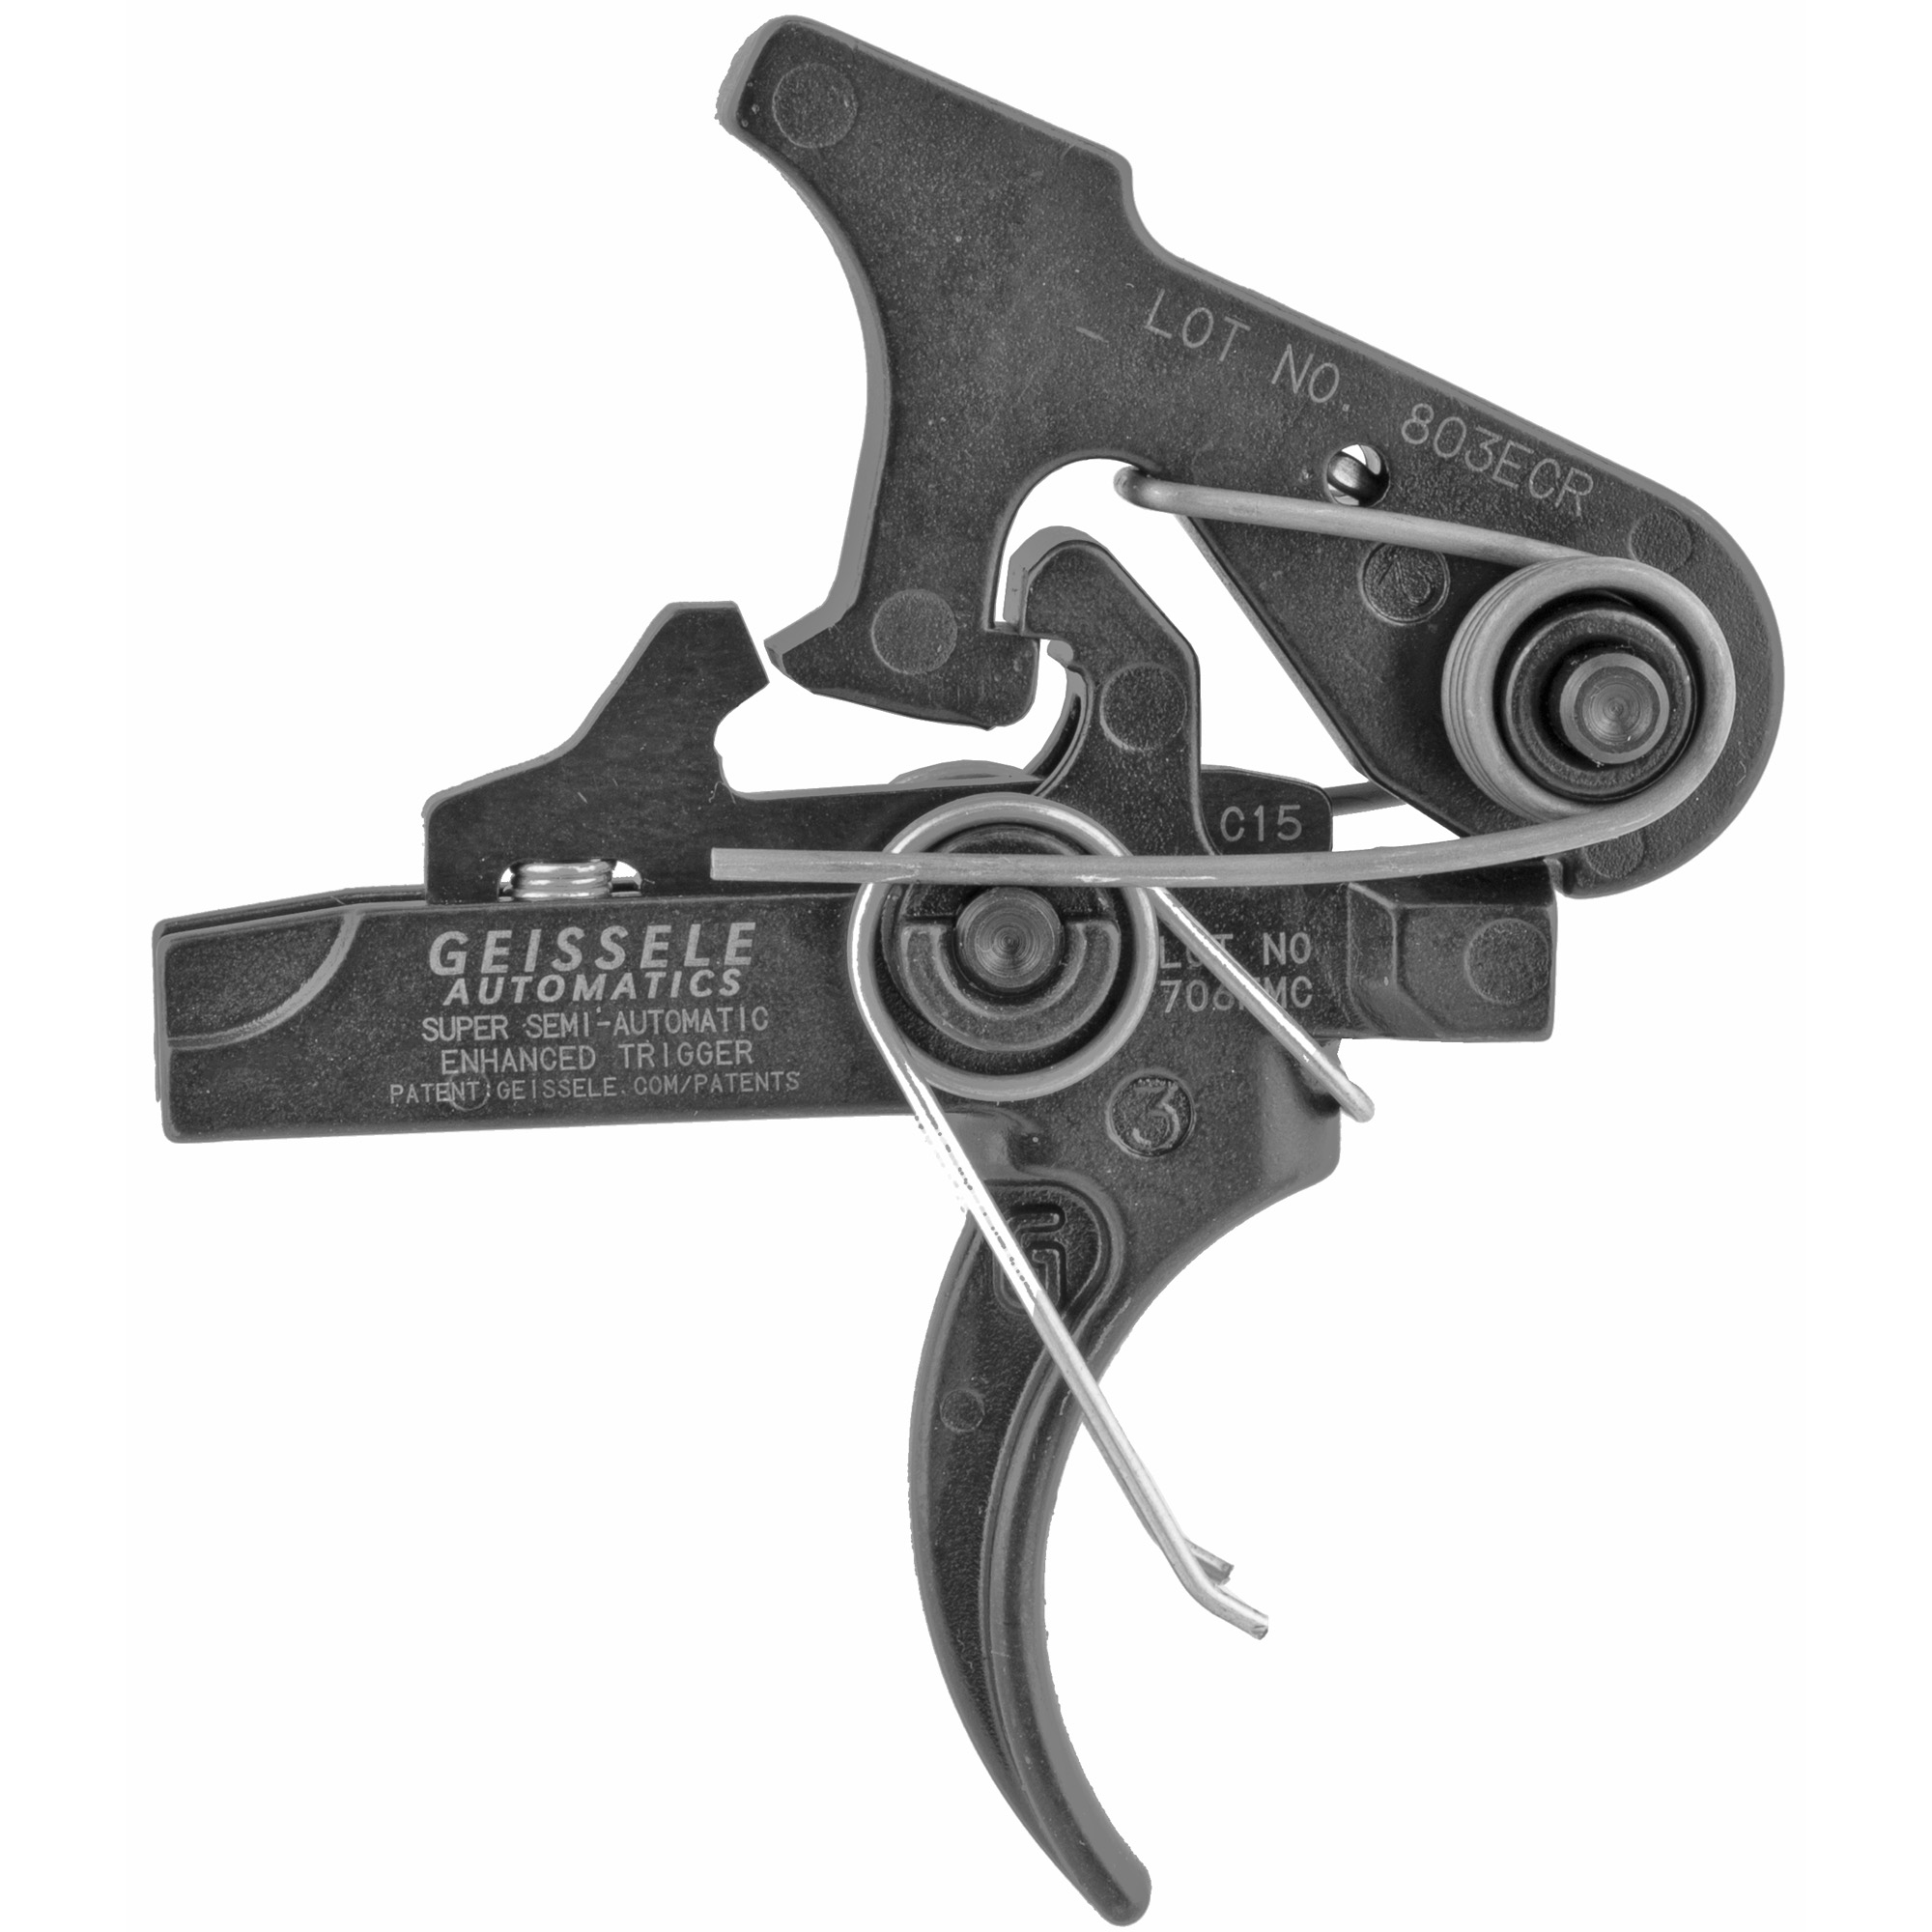 Geissele Super Semi-Automatic Enhanced (SSA-E) Trigger